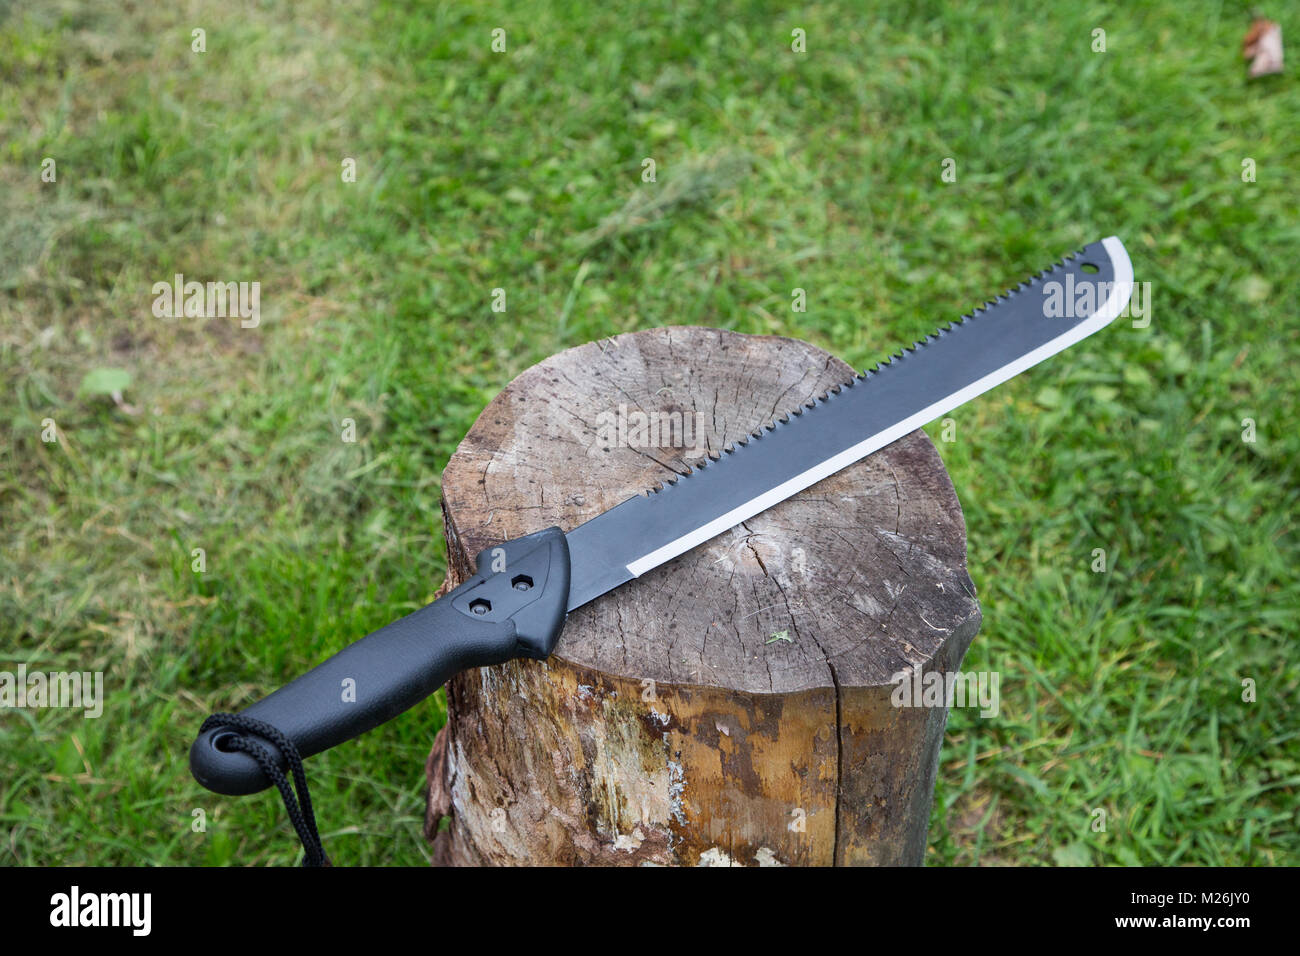 machete on a stump close up on a grass background Stock Photo